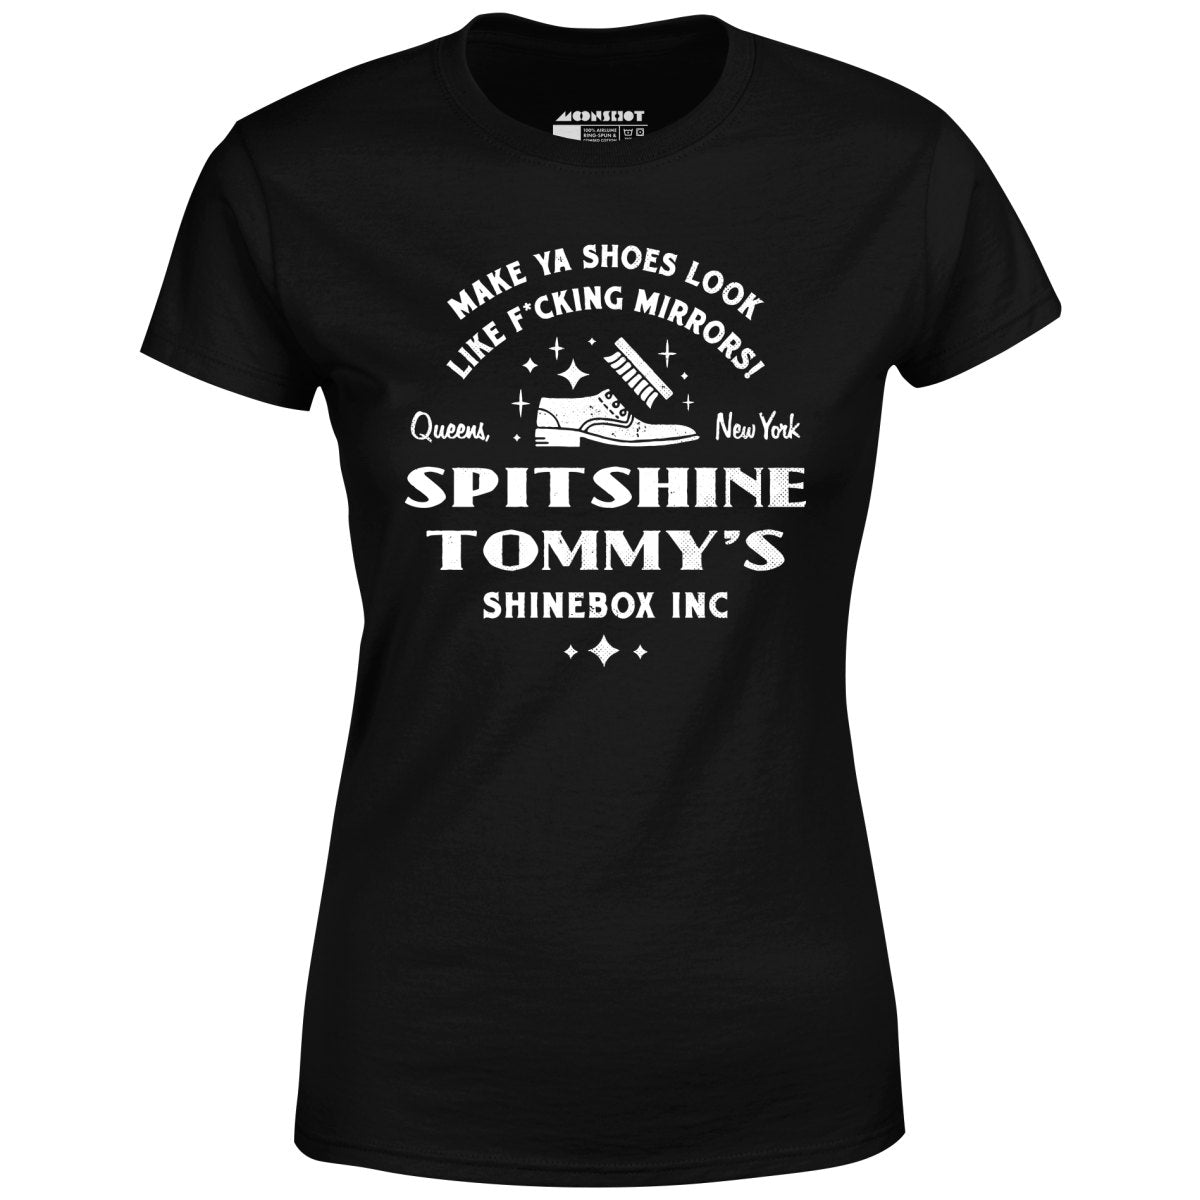 Spitshine Tommy's Shinebox Inc. - Women's T-Shirt